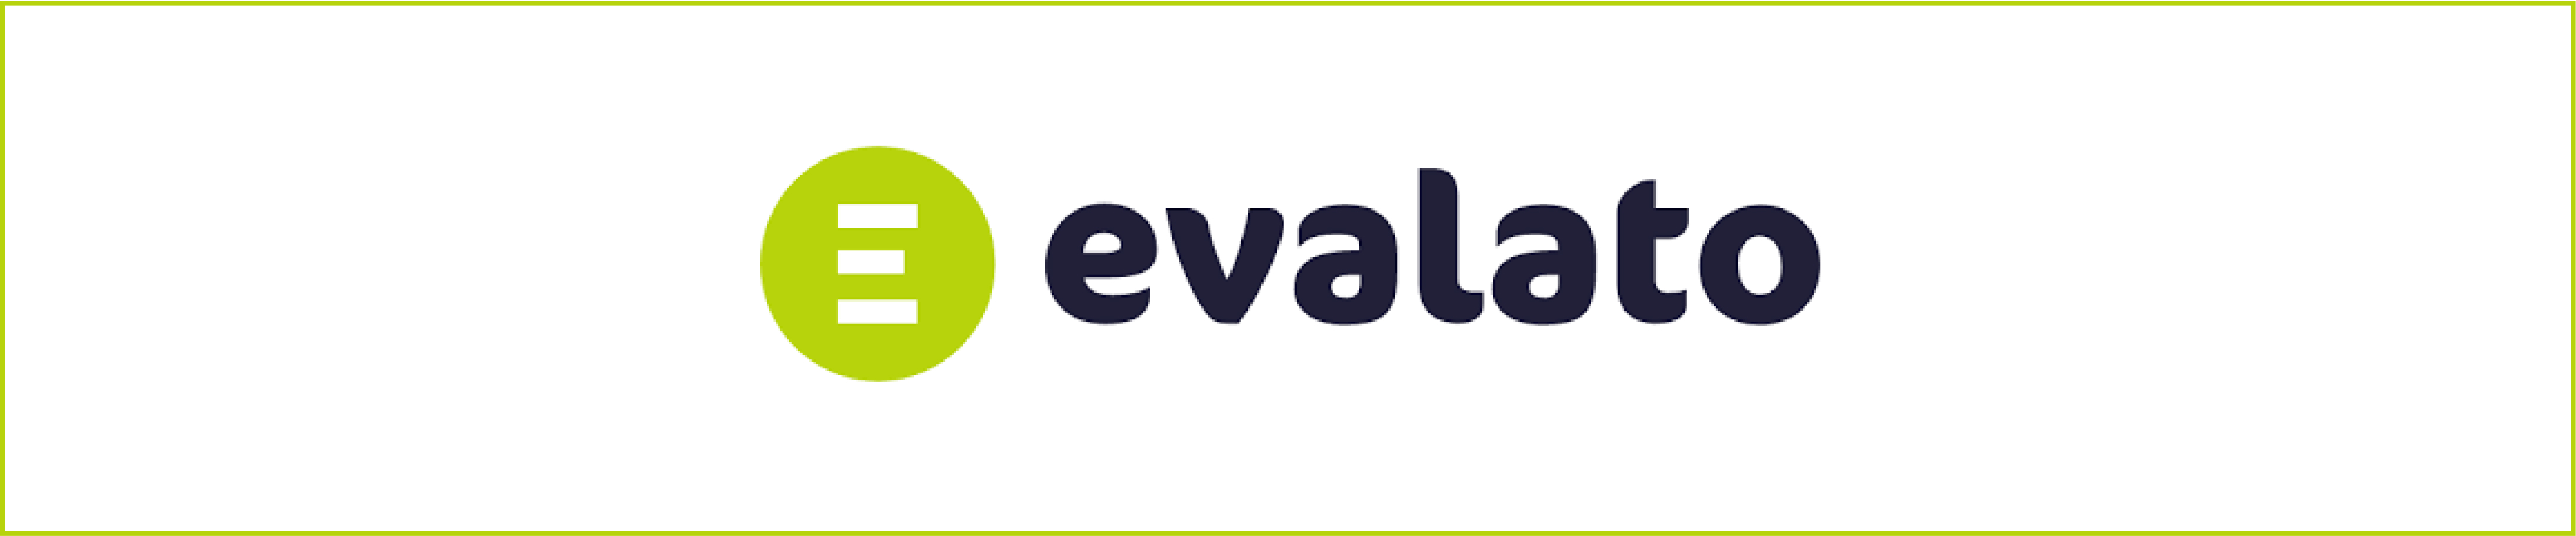 Evalato-header